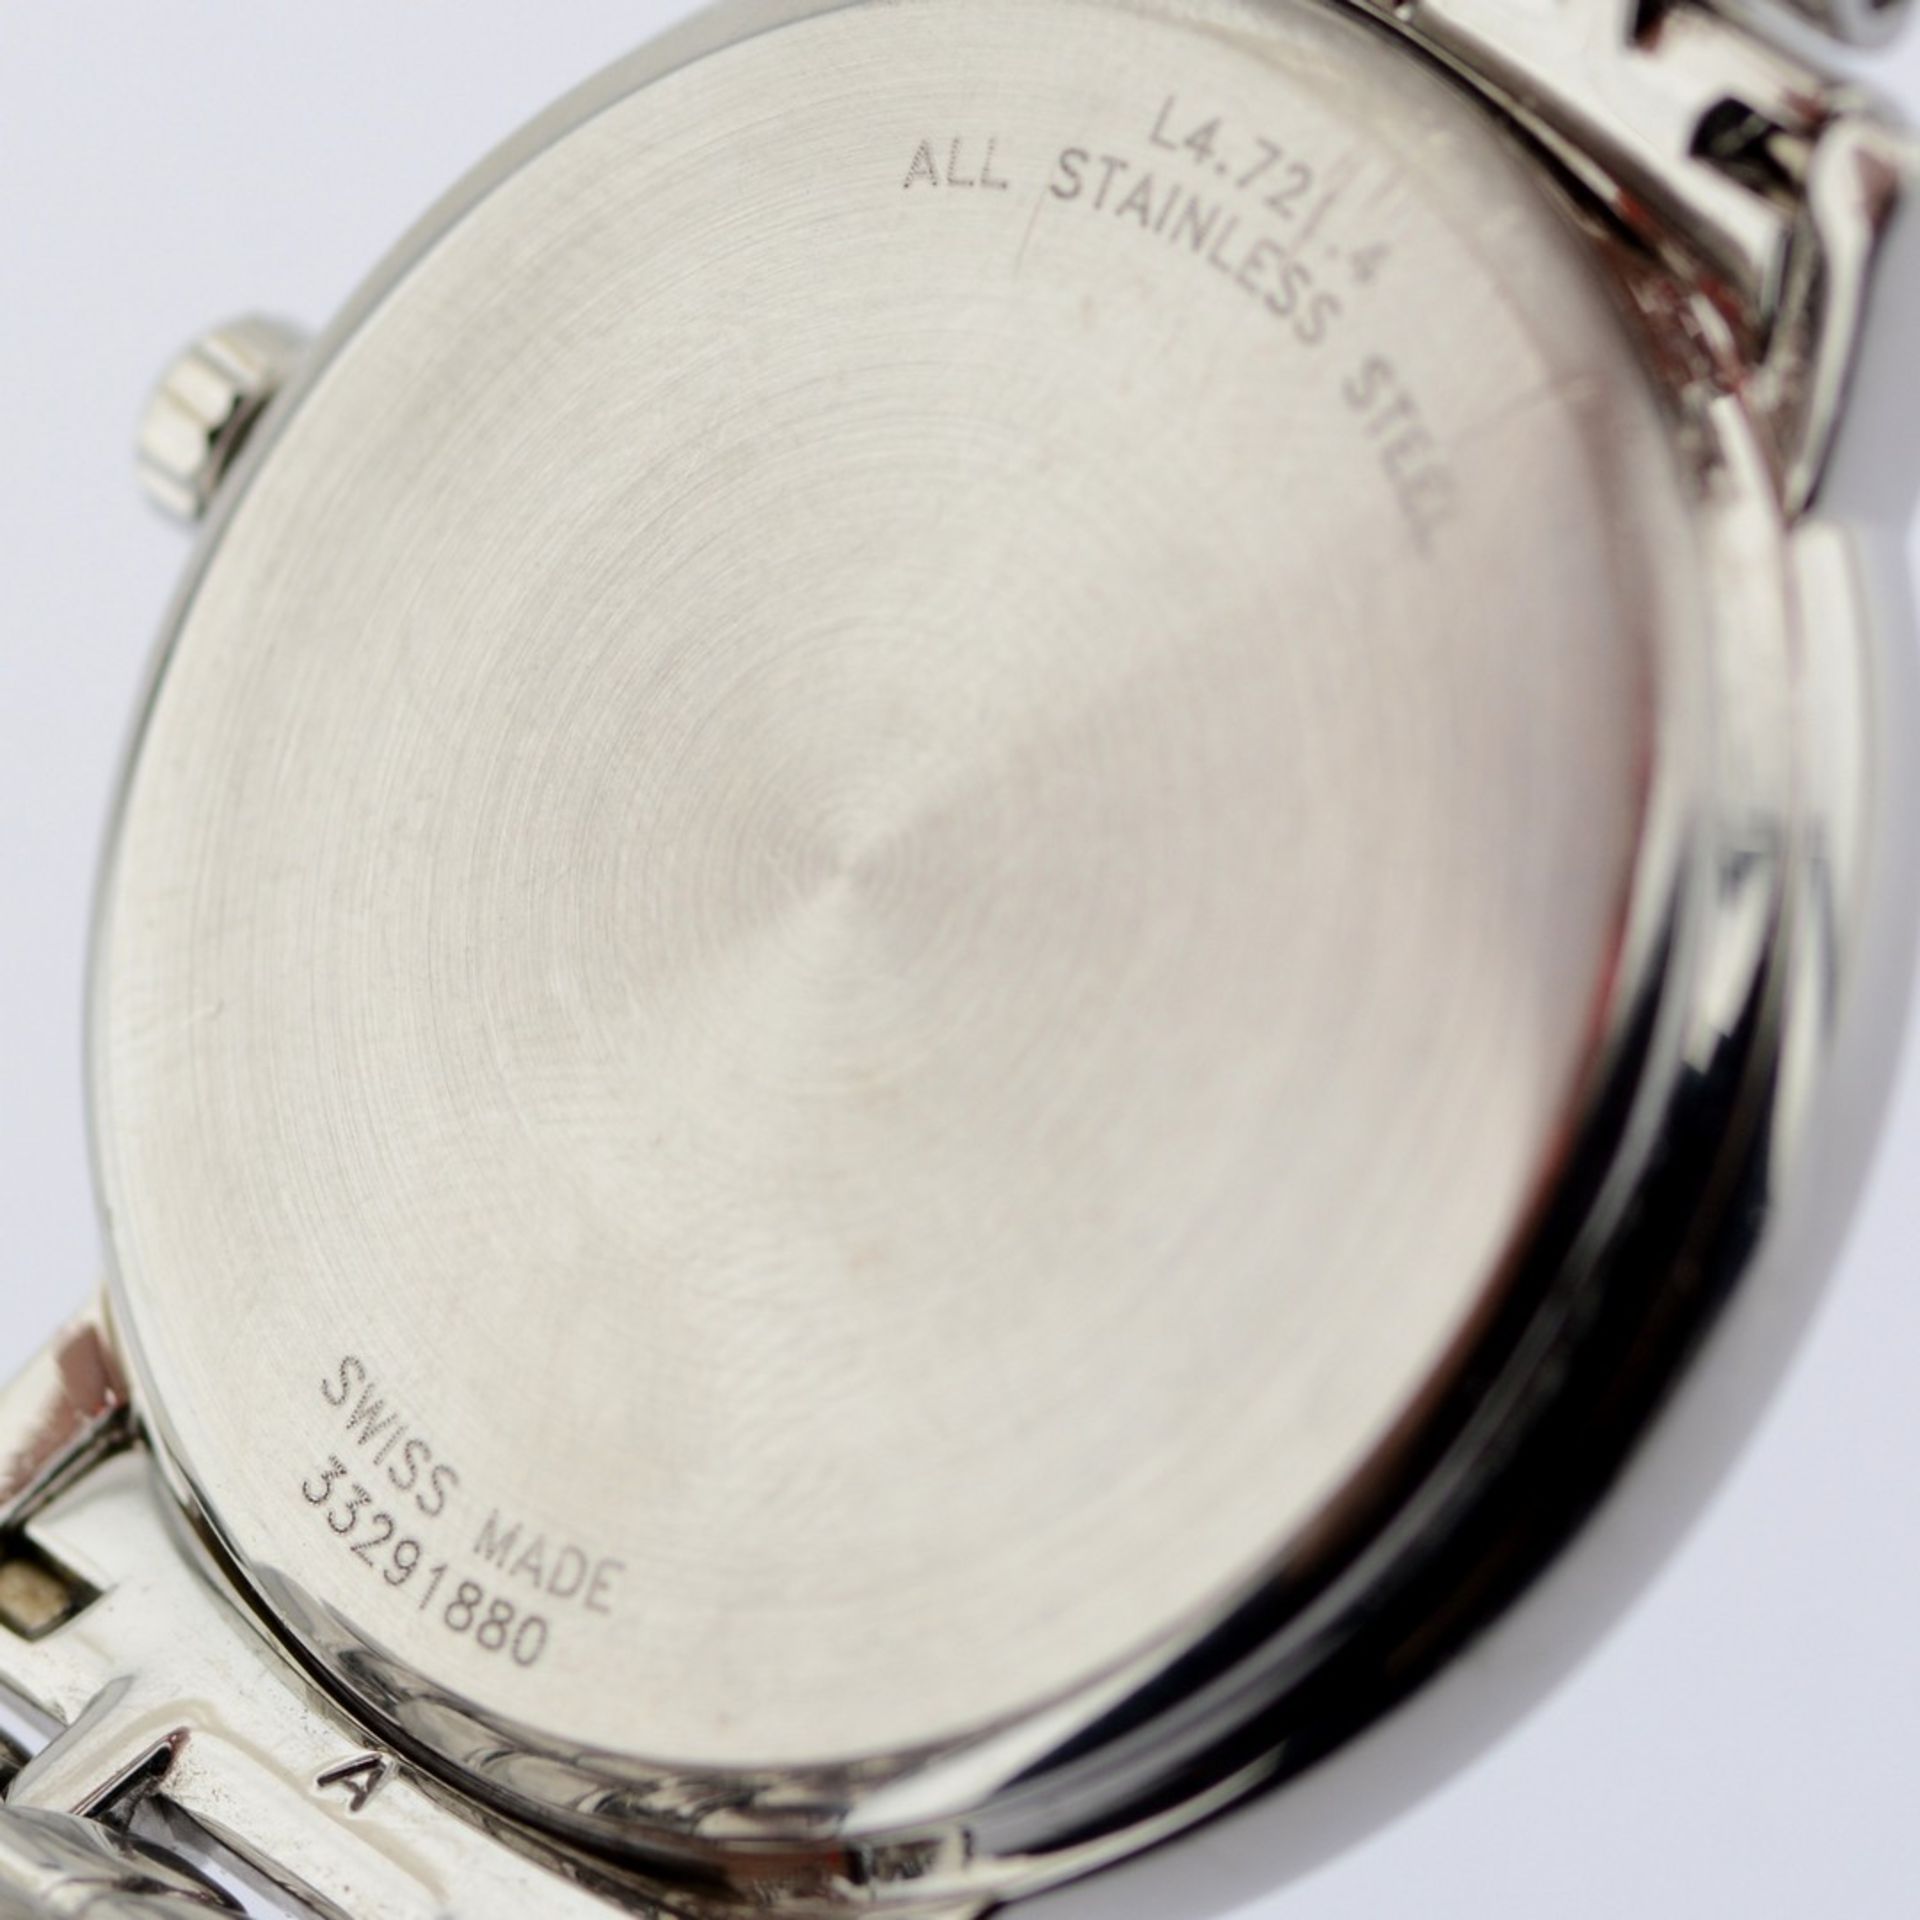 Longines / Presence Automatic Date 34 mm - Gentlemen's Steel Wristwatch - Image 7 of 7